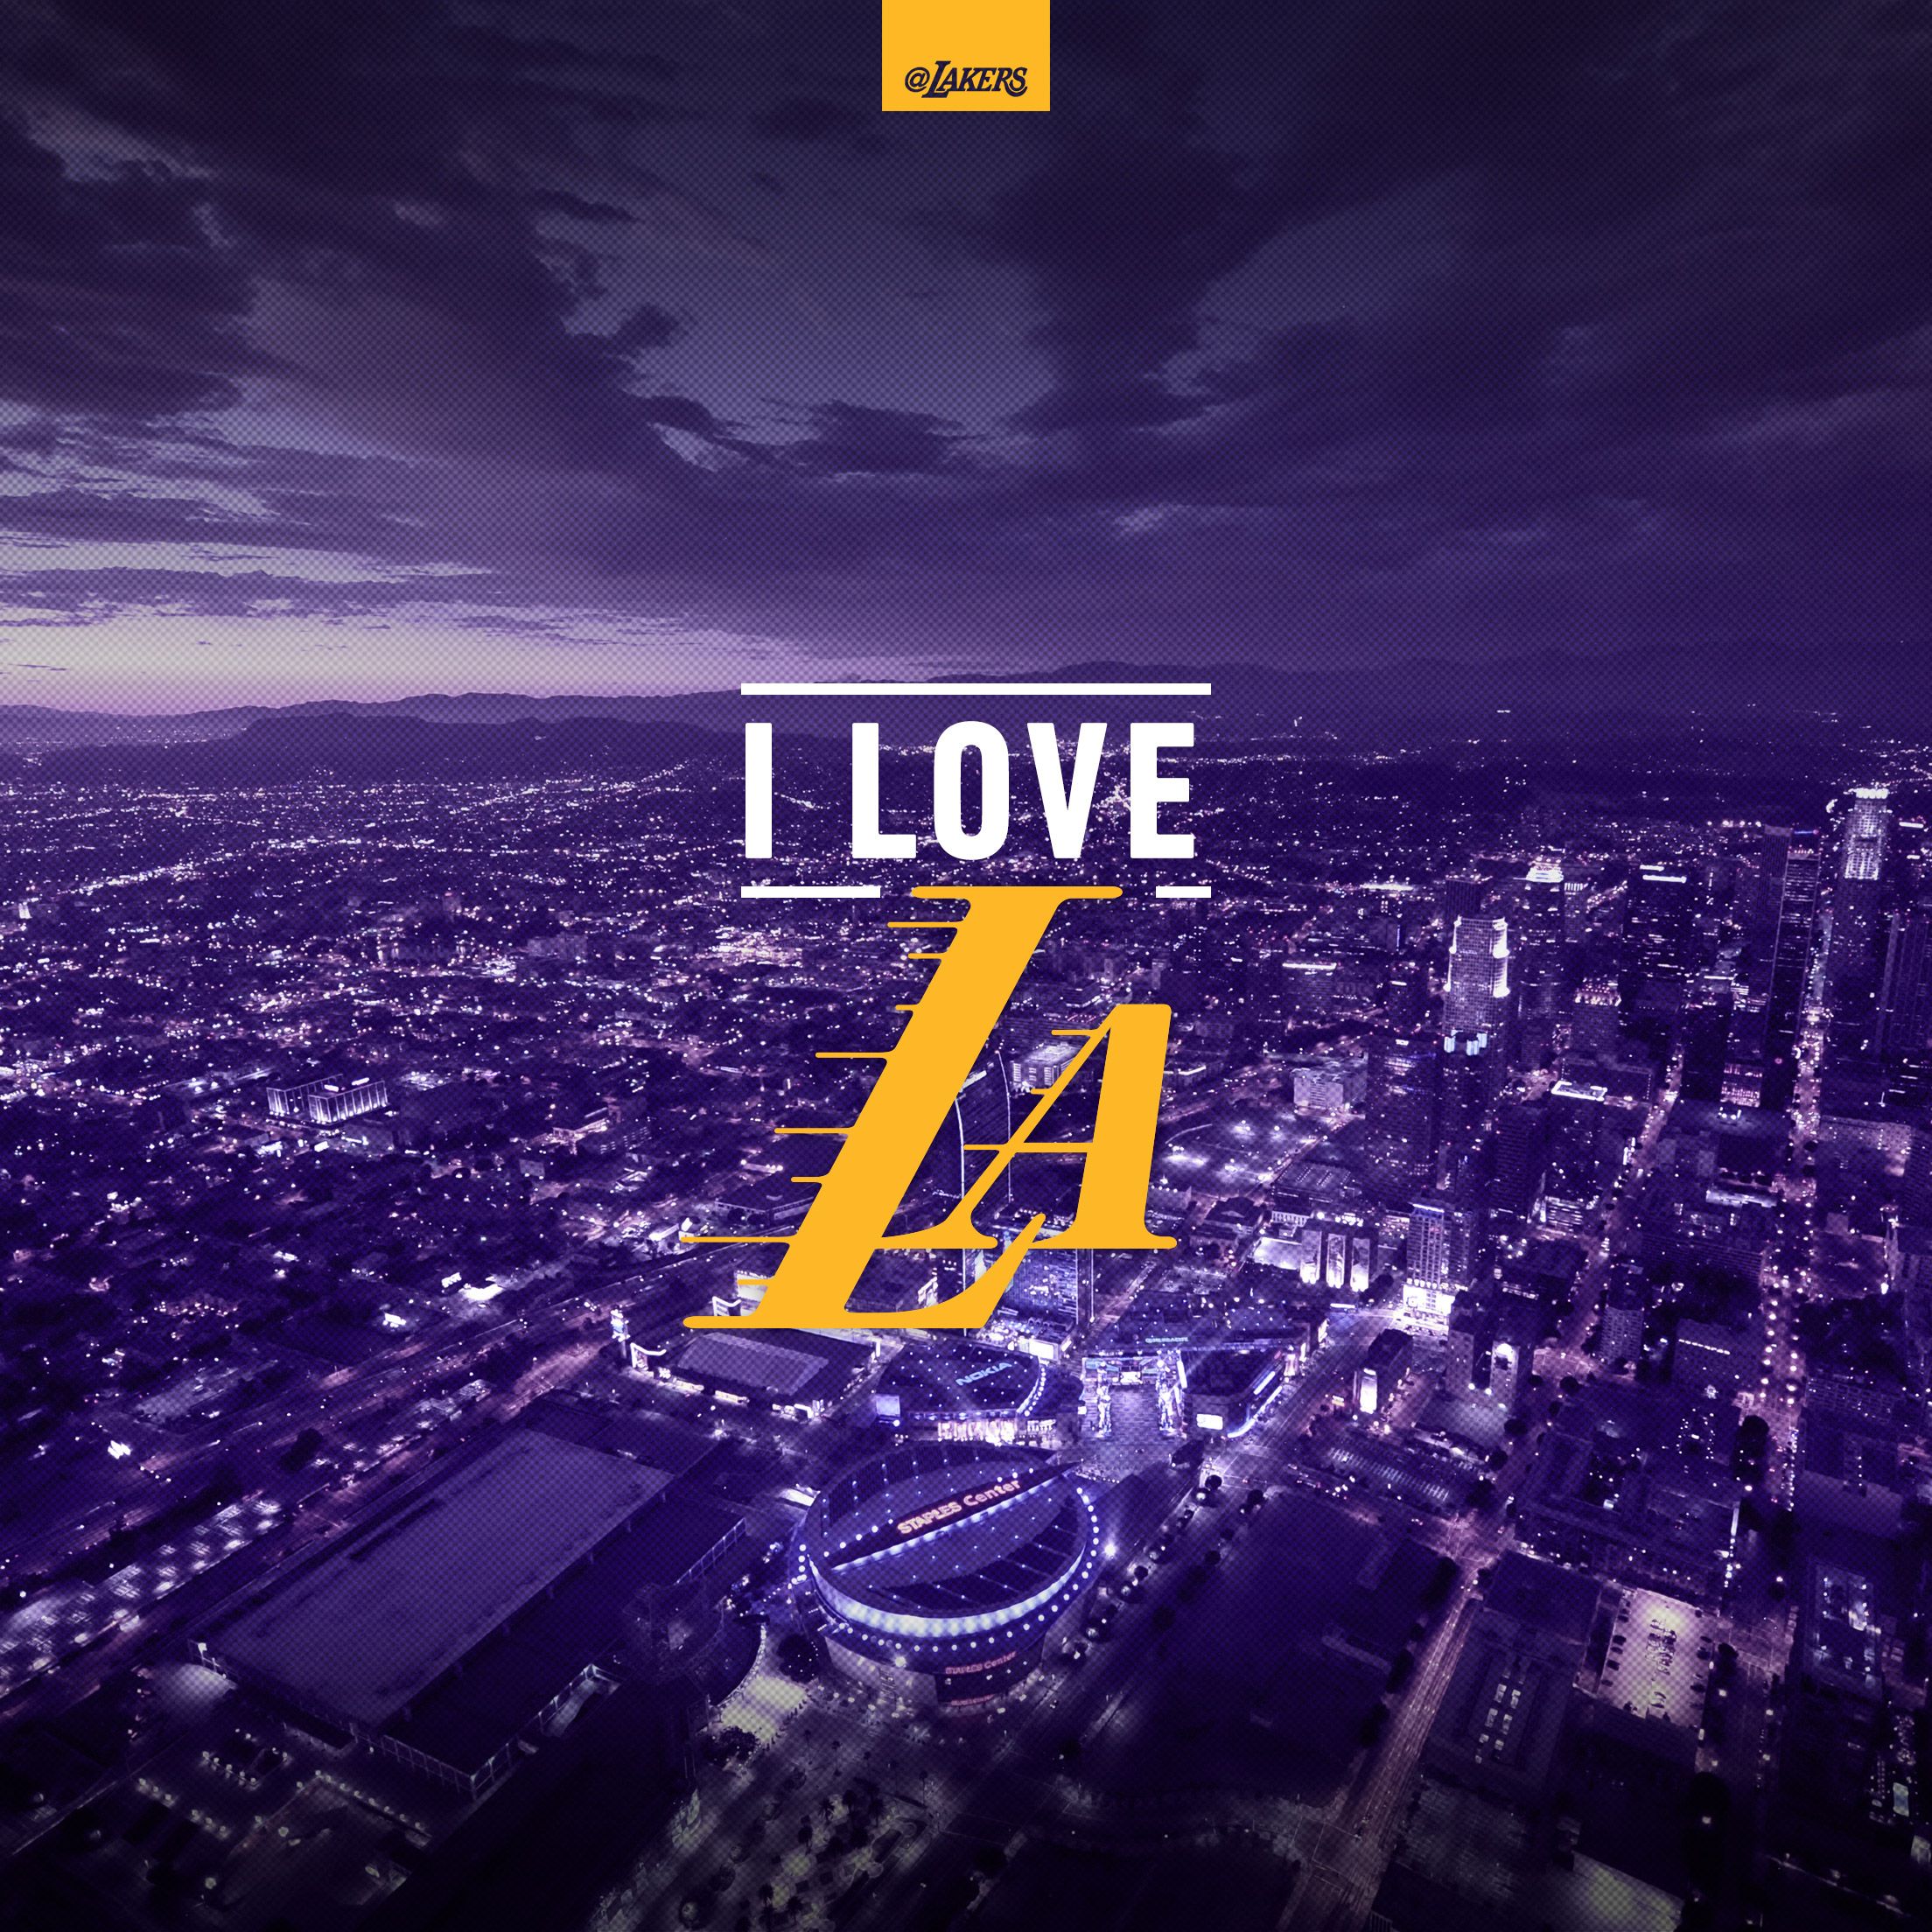 Lakers Background. LA Lakers Wallpaper, Los Angeles Lakers Wallpaper and Lakers Wallpaper